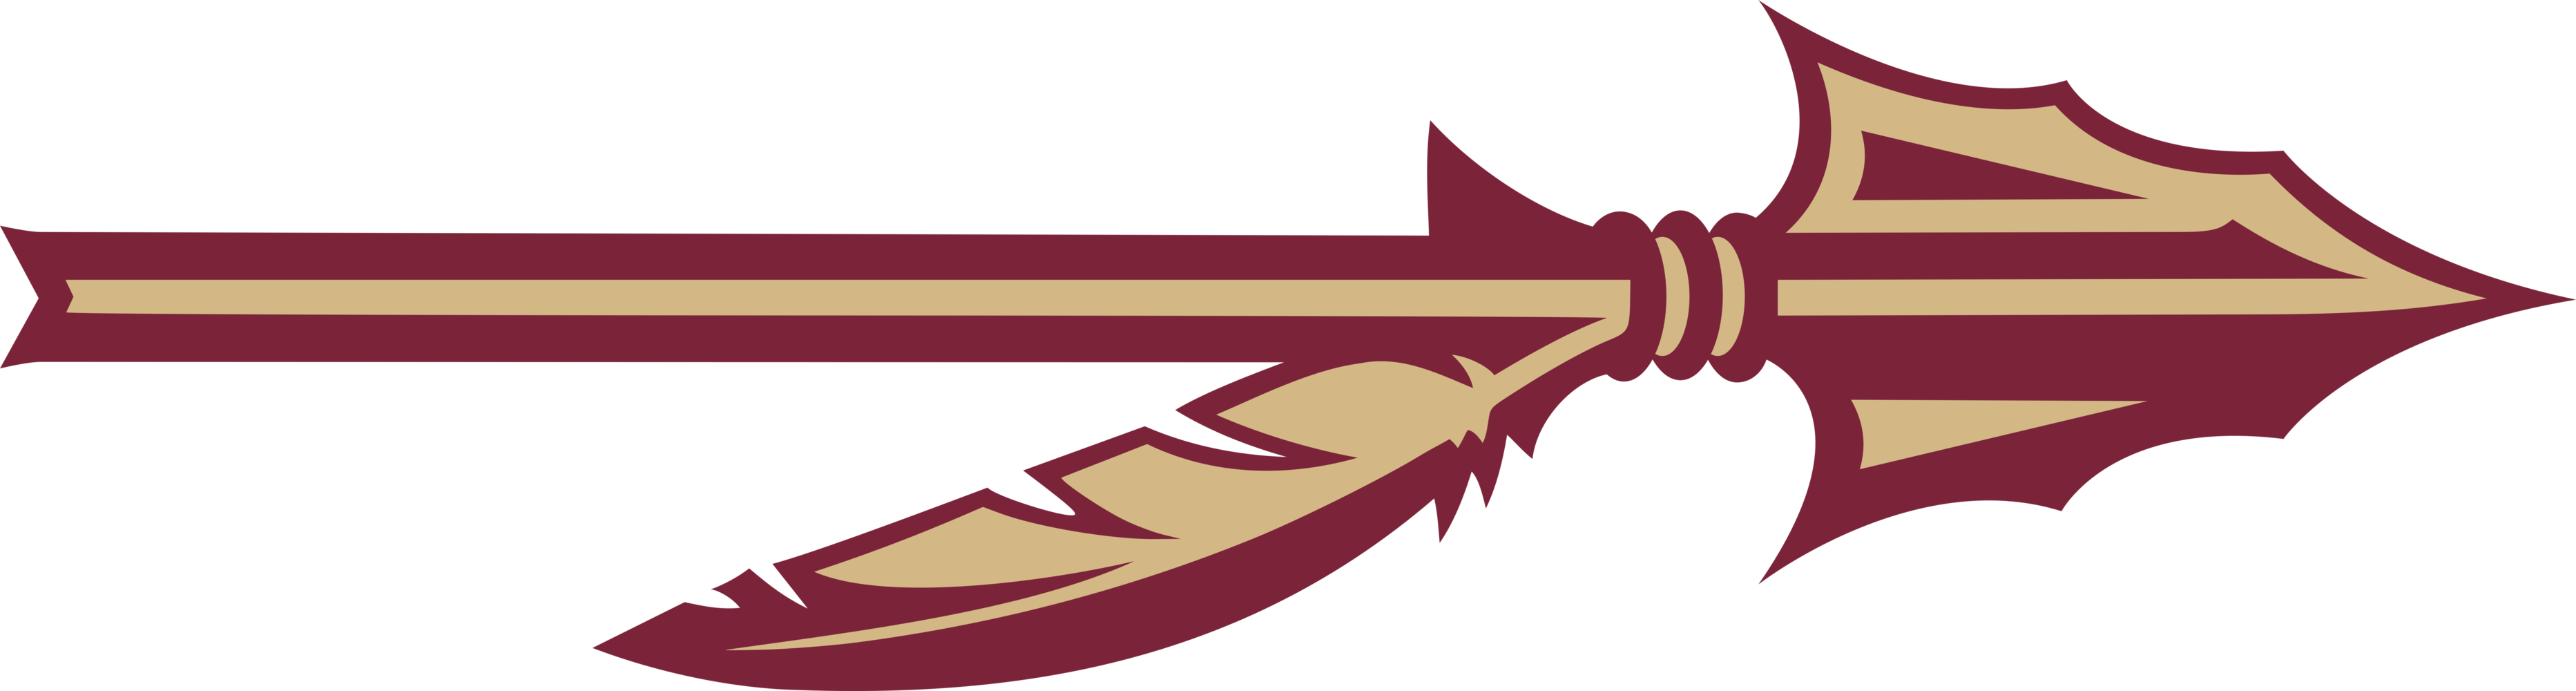 Arrow Spear Logo - New FSU Spear and Pattern - Concepts - Chris Creamer's Sports Logos ...